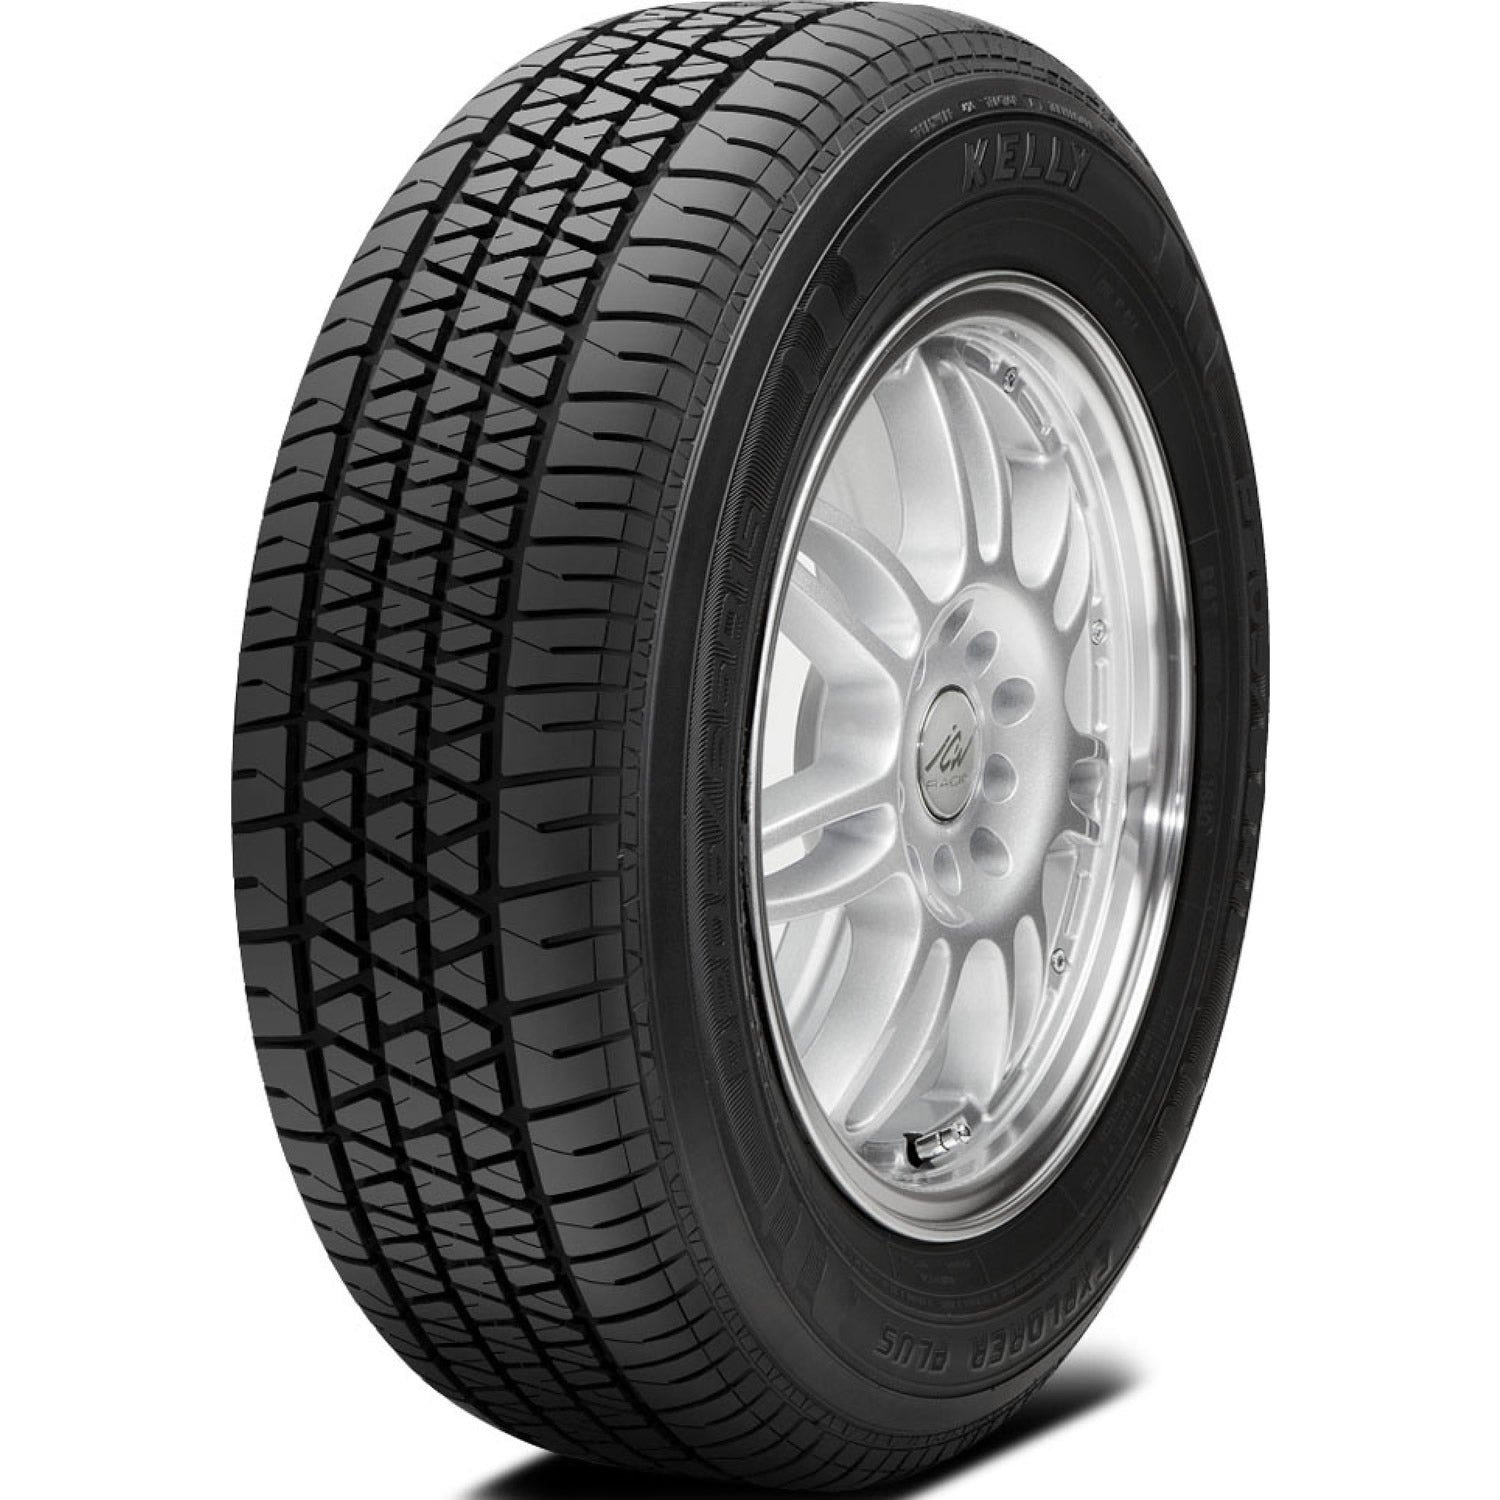 KELLY EXPLORER PLUS 215/60R15 (25.2X8.7R 15) Tires